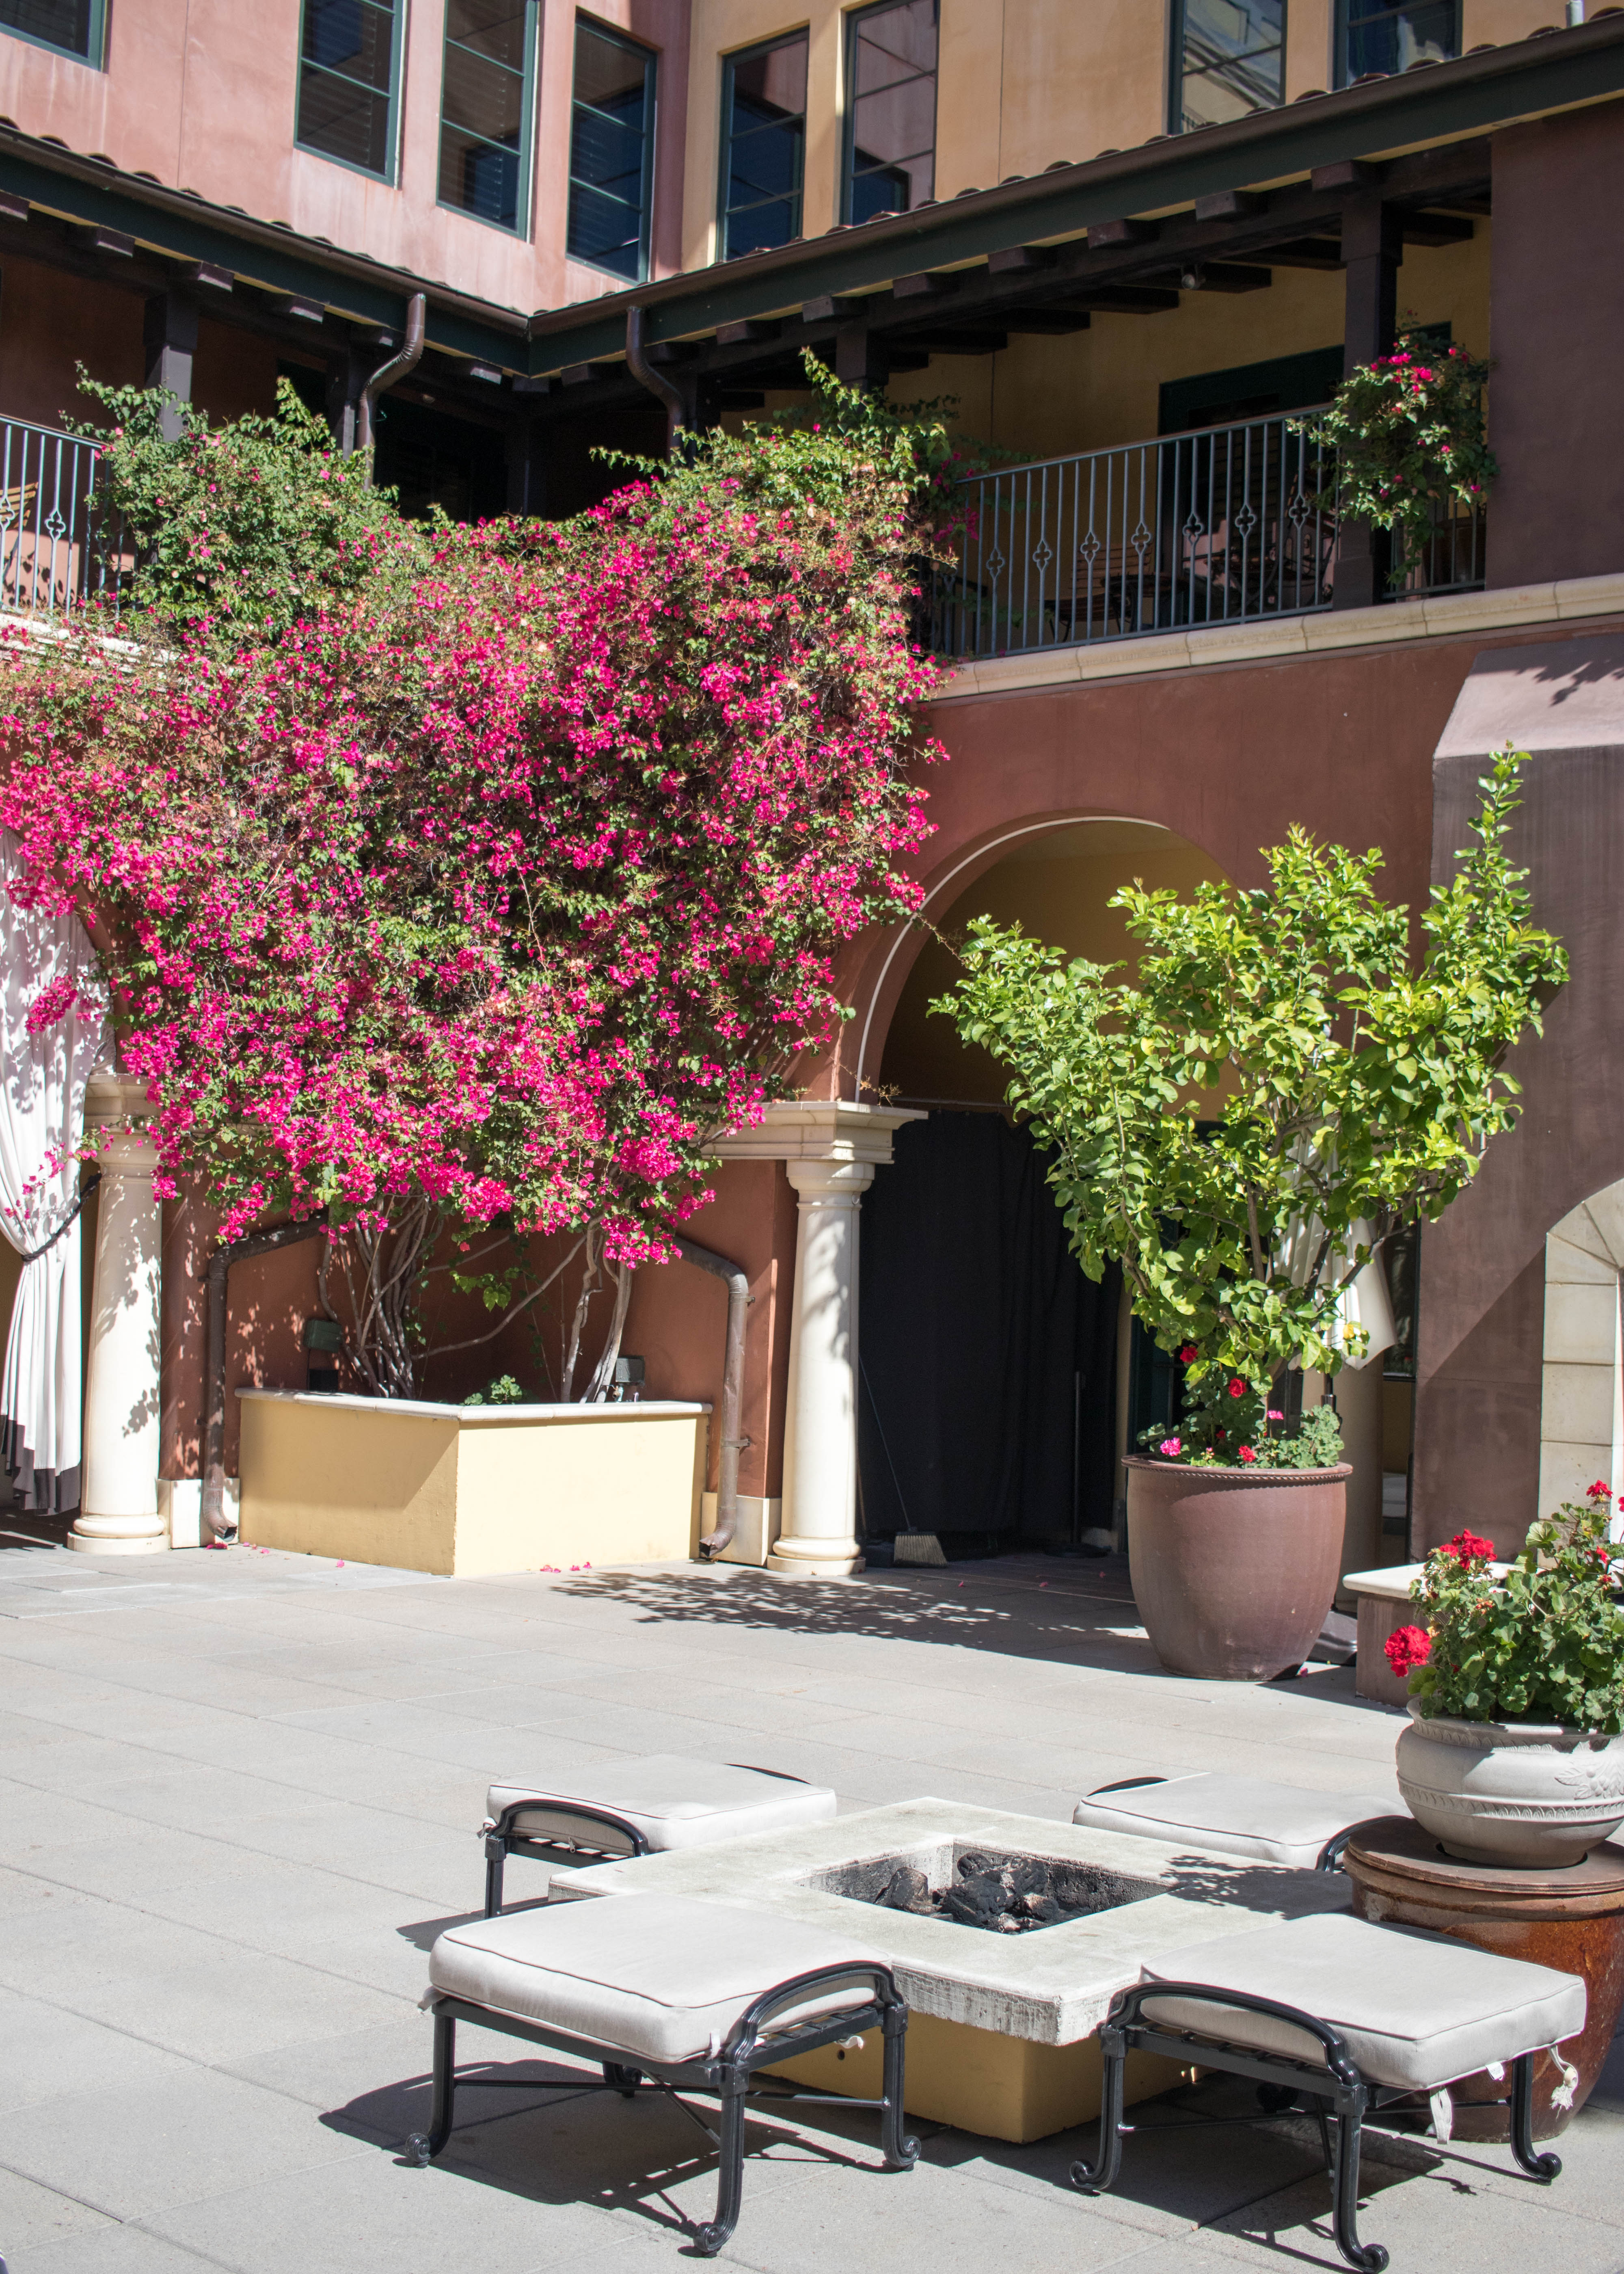 our trip to San Jose California hotel Valencia #sanjose #visitcalifornia #travelguide